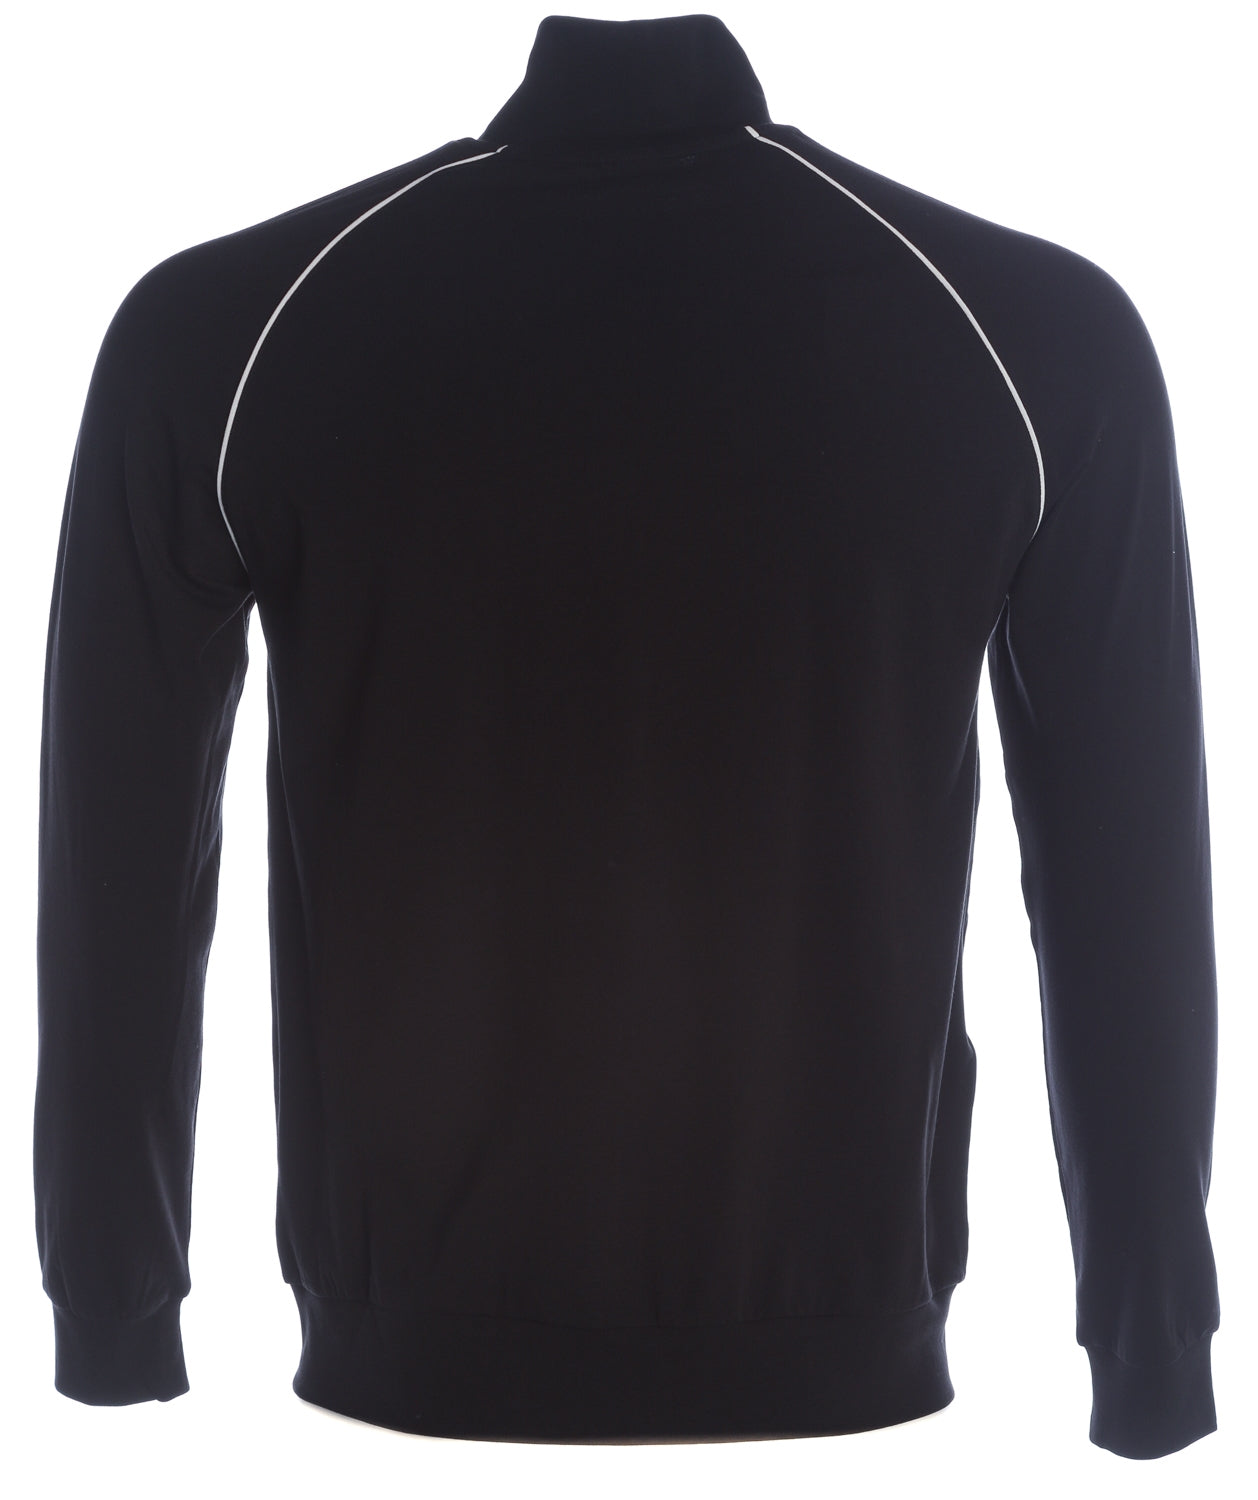 BOSS Mix & Match Jacket Z Sweat Top in Black & White